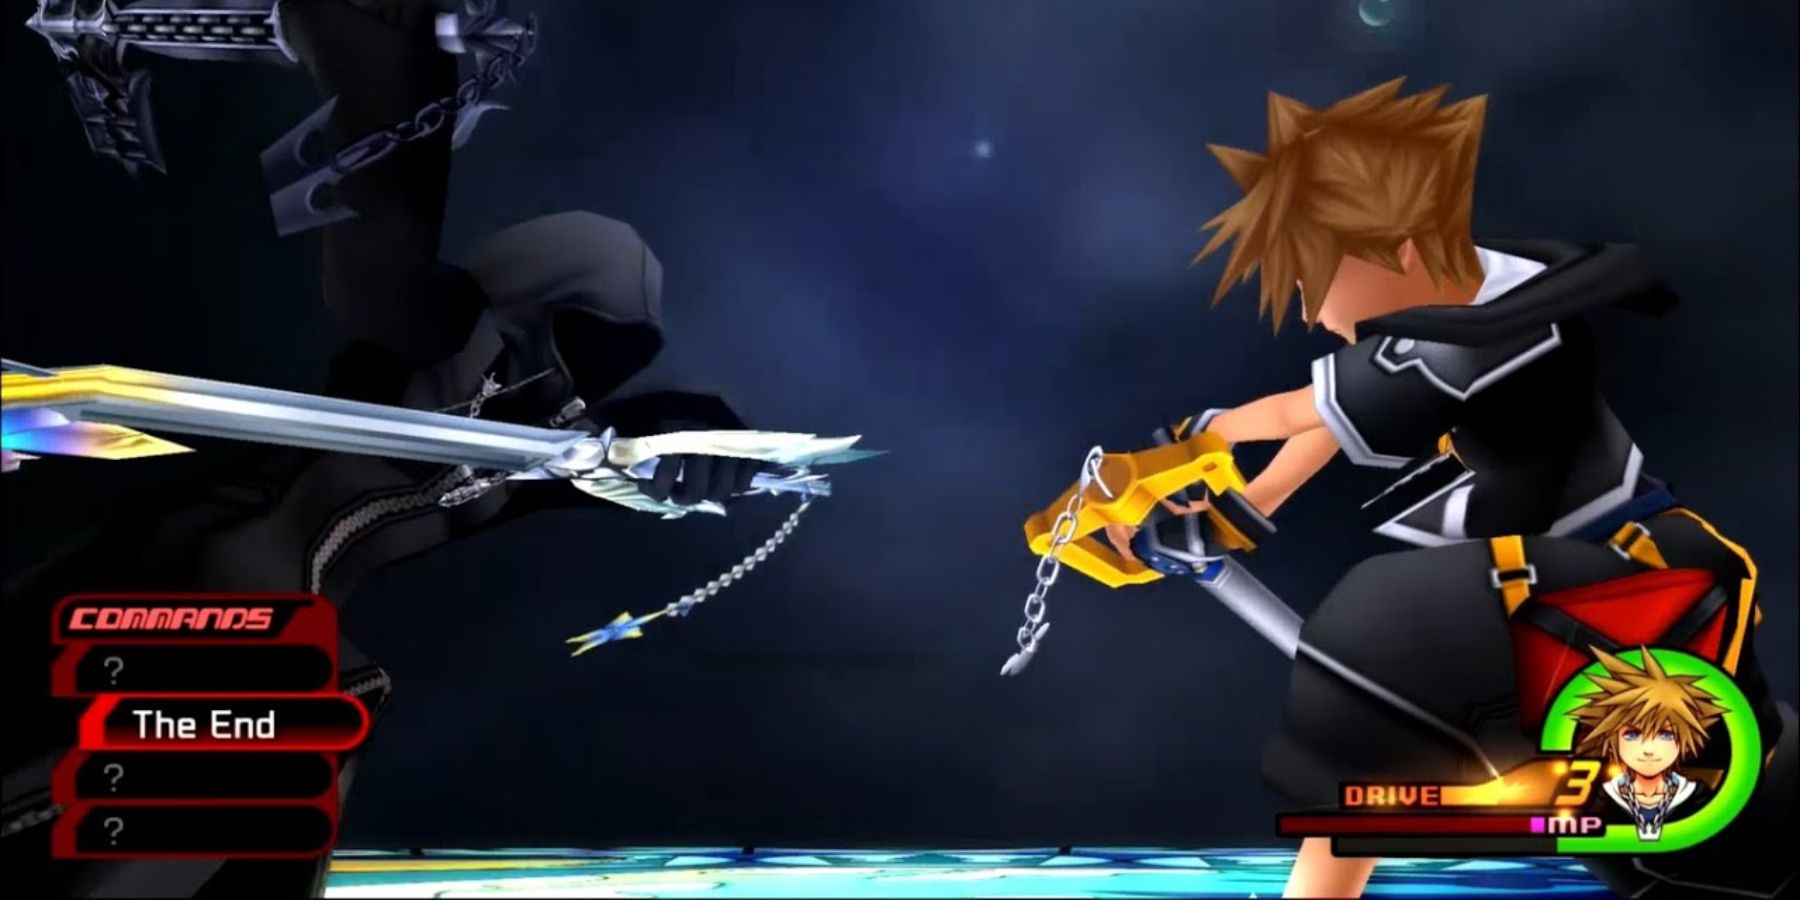 Sora fights Roxas in Kingdom Hearts 2